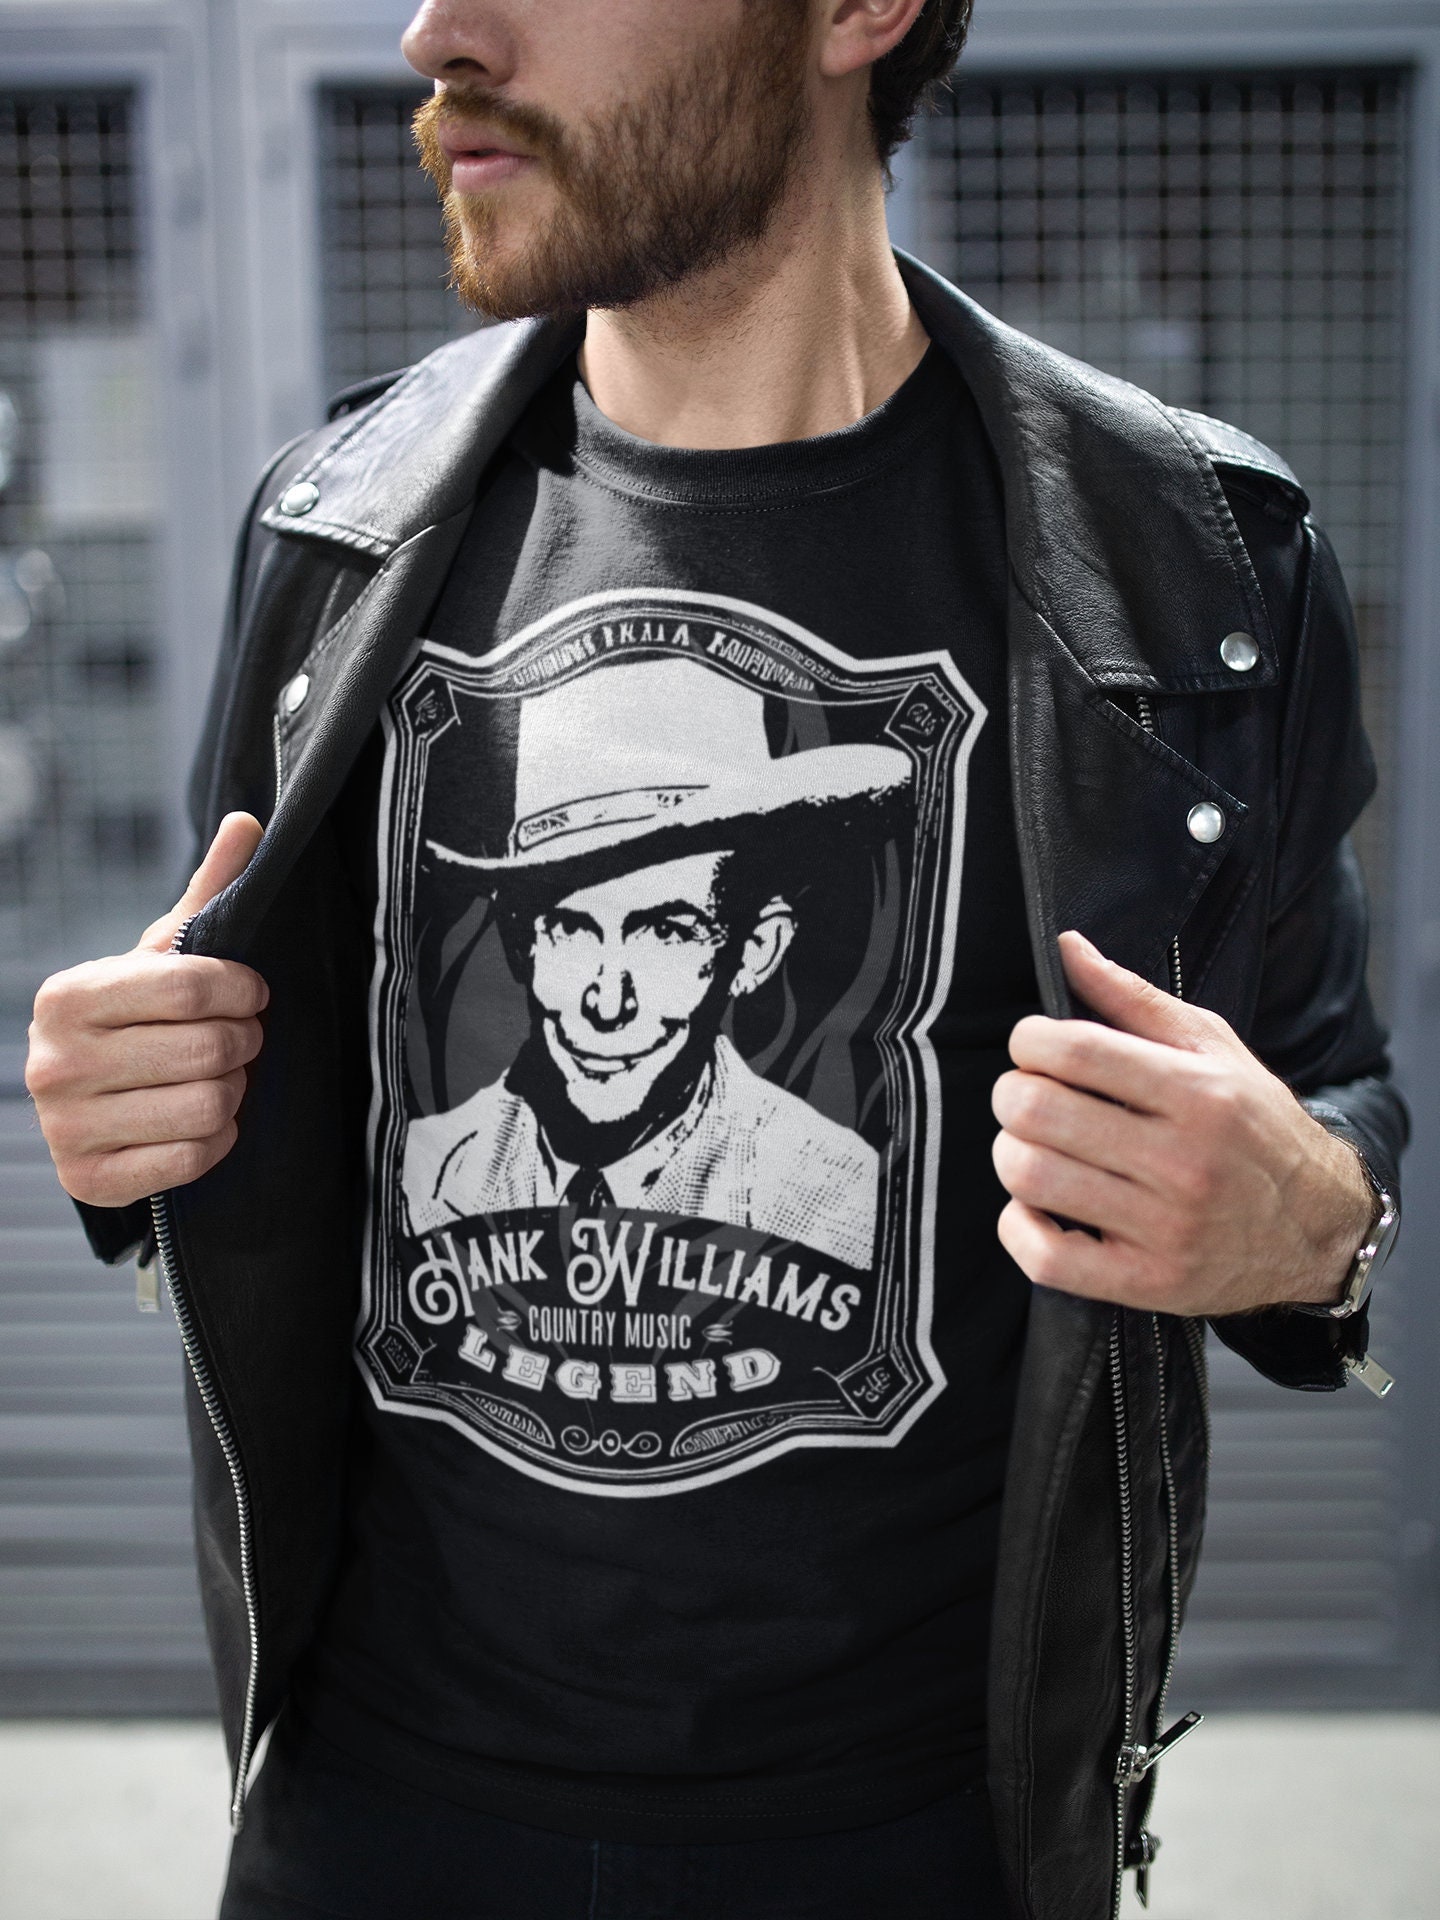 Hank Williams Shirt - Vintage Country Music T-shirt